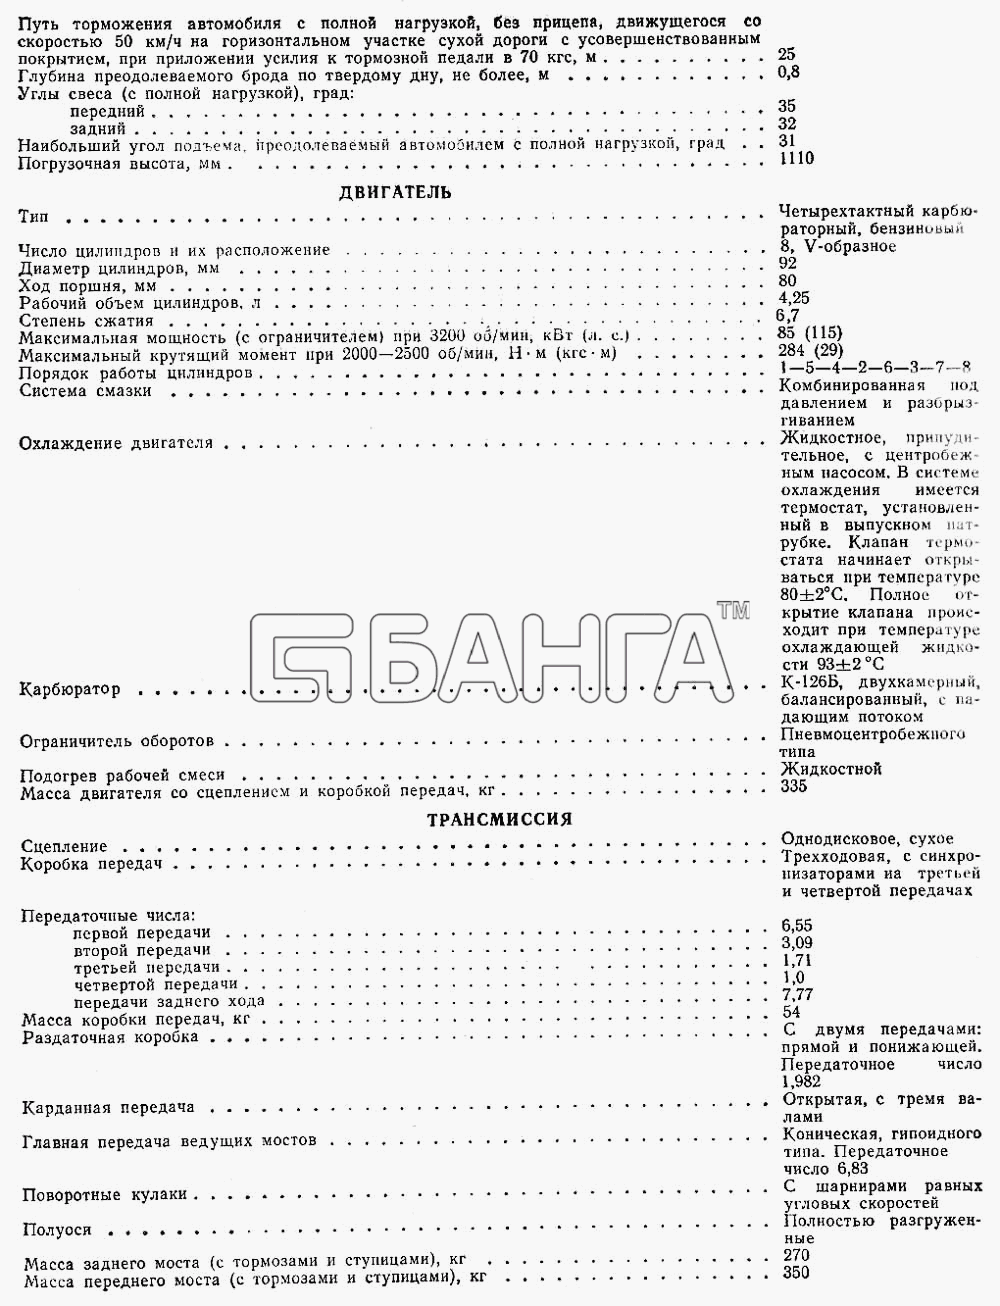 ГАЗ ГАЗ-66 (Каталог 1983 г.) Схема Лист 2 banga.ua